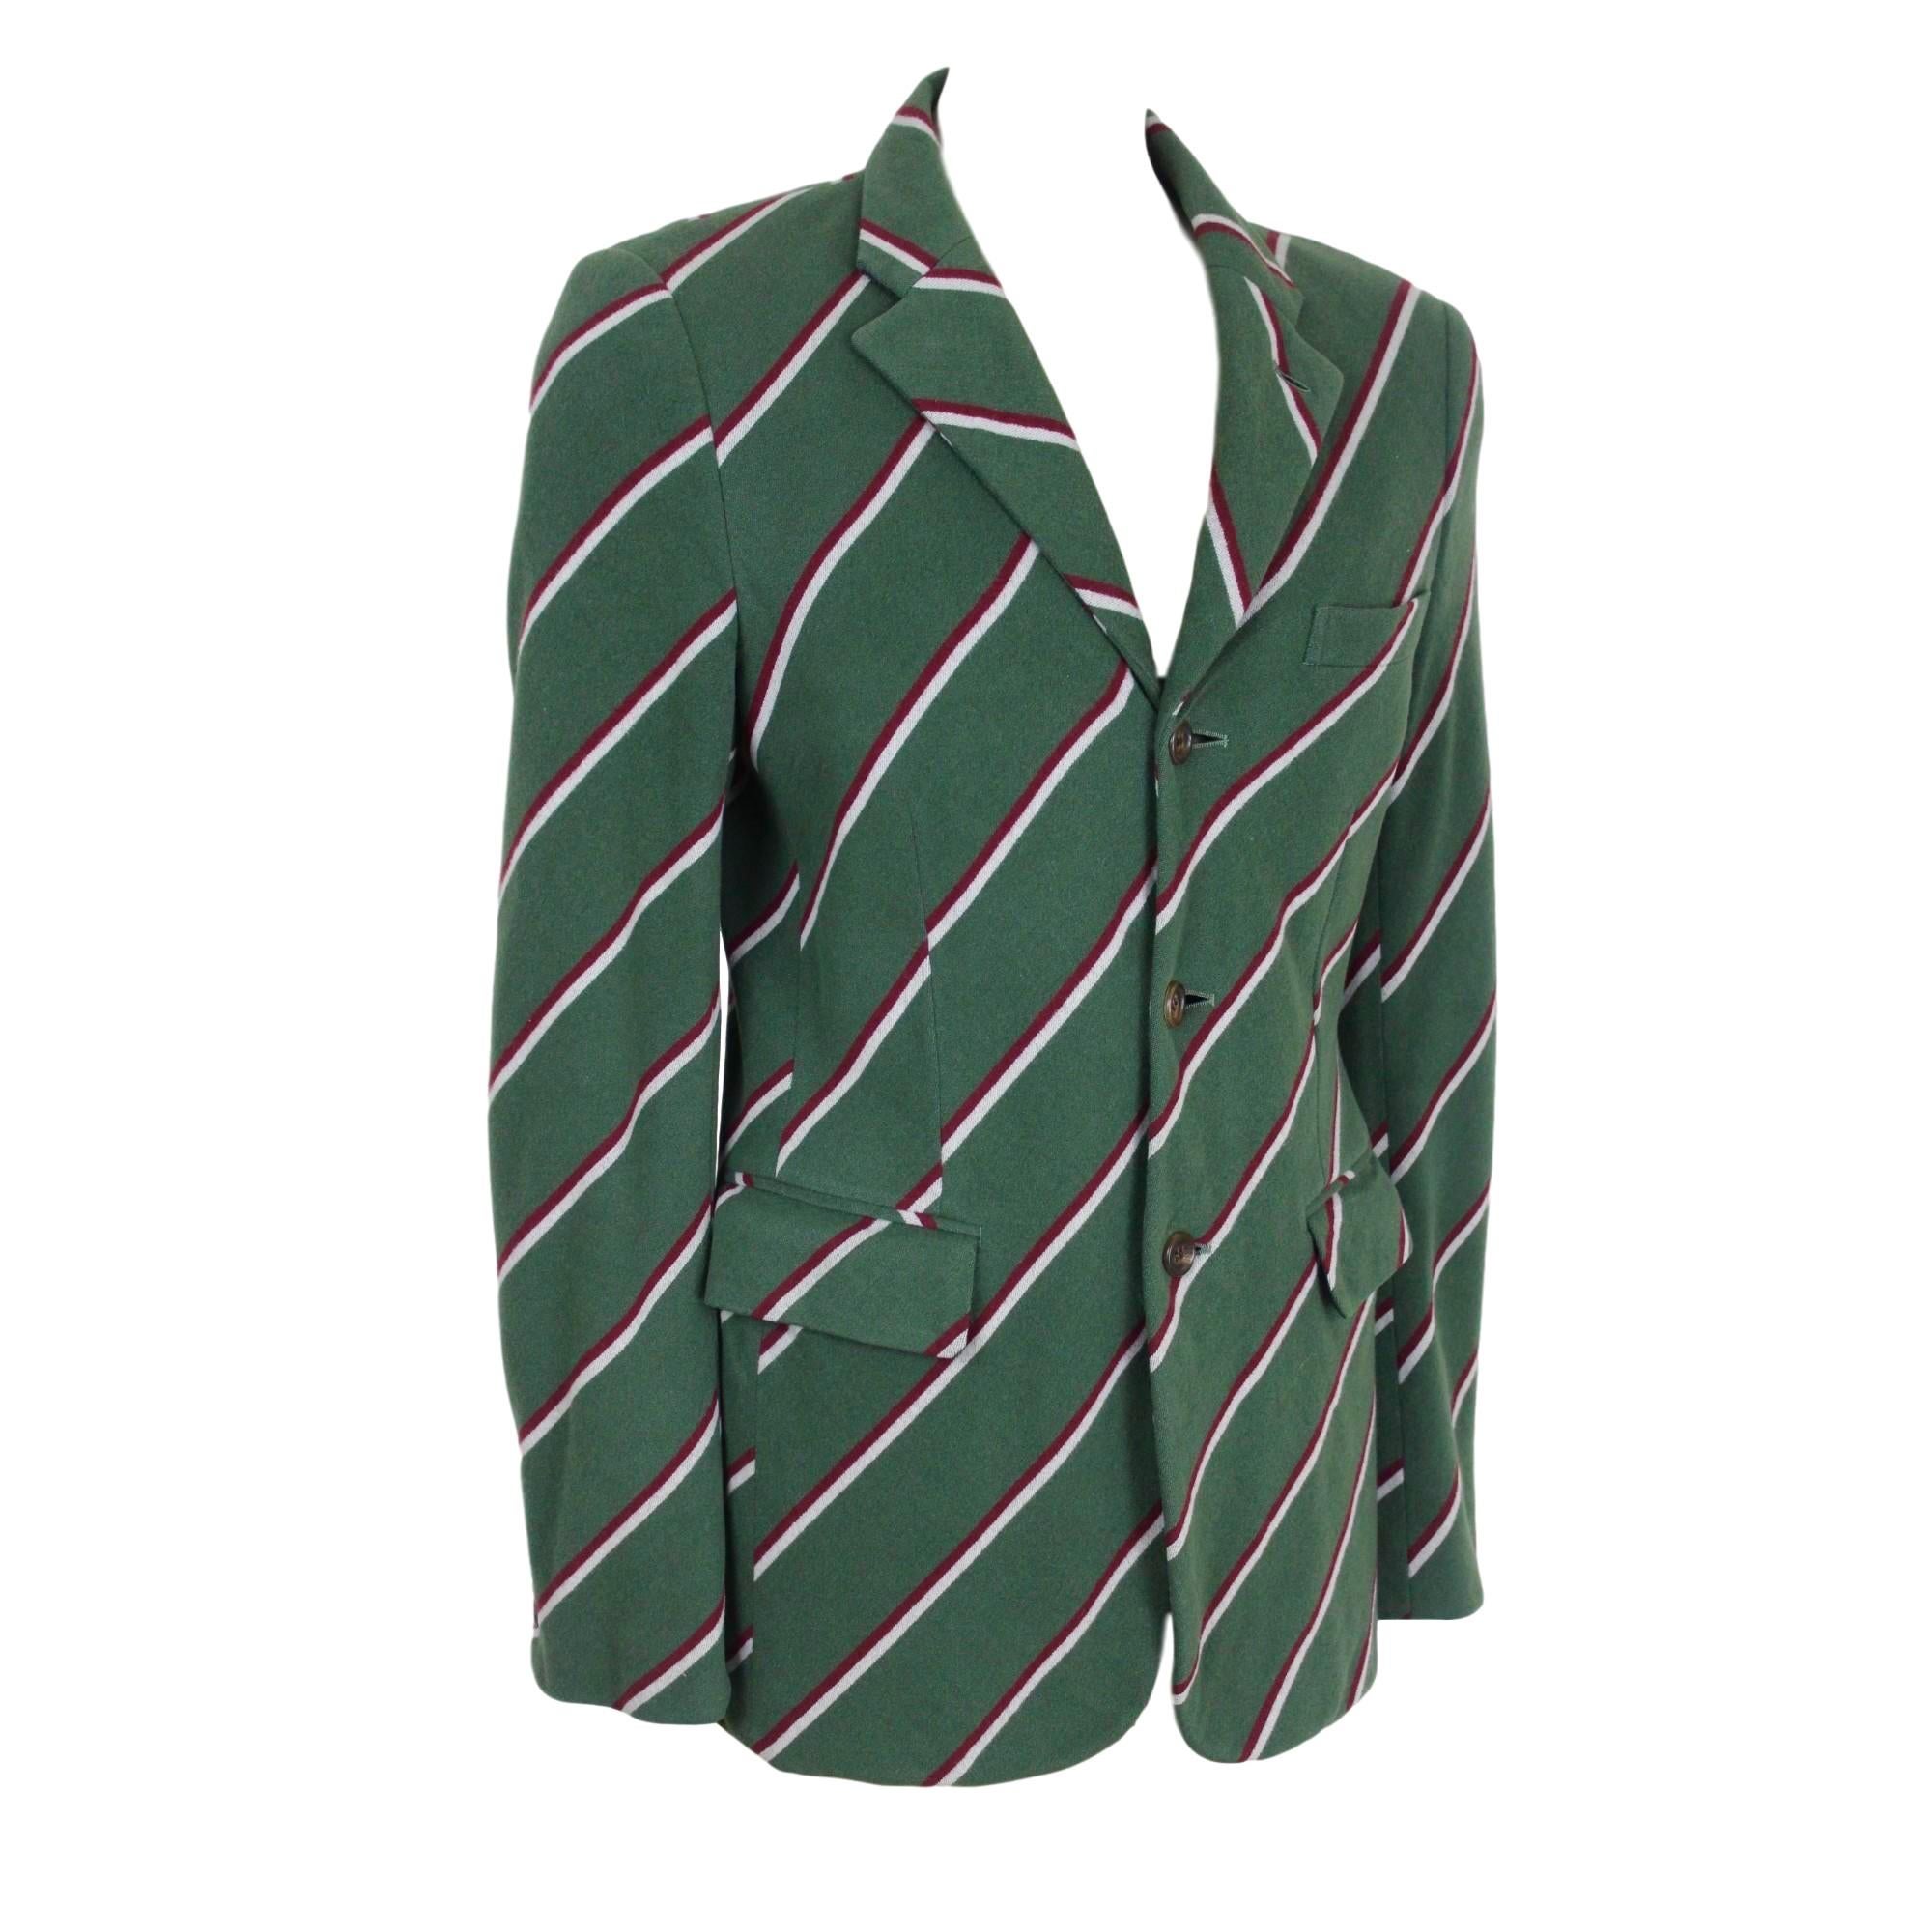 Comme des Garcons
Homme Plus
Evergreen 
Striped Jacket
Size s